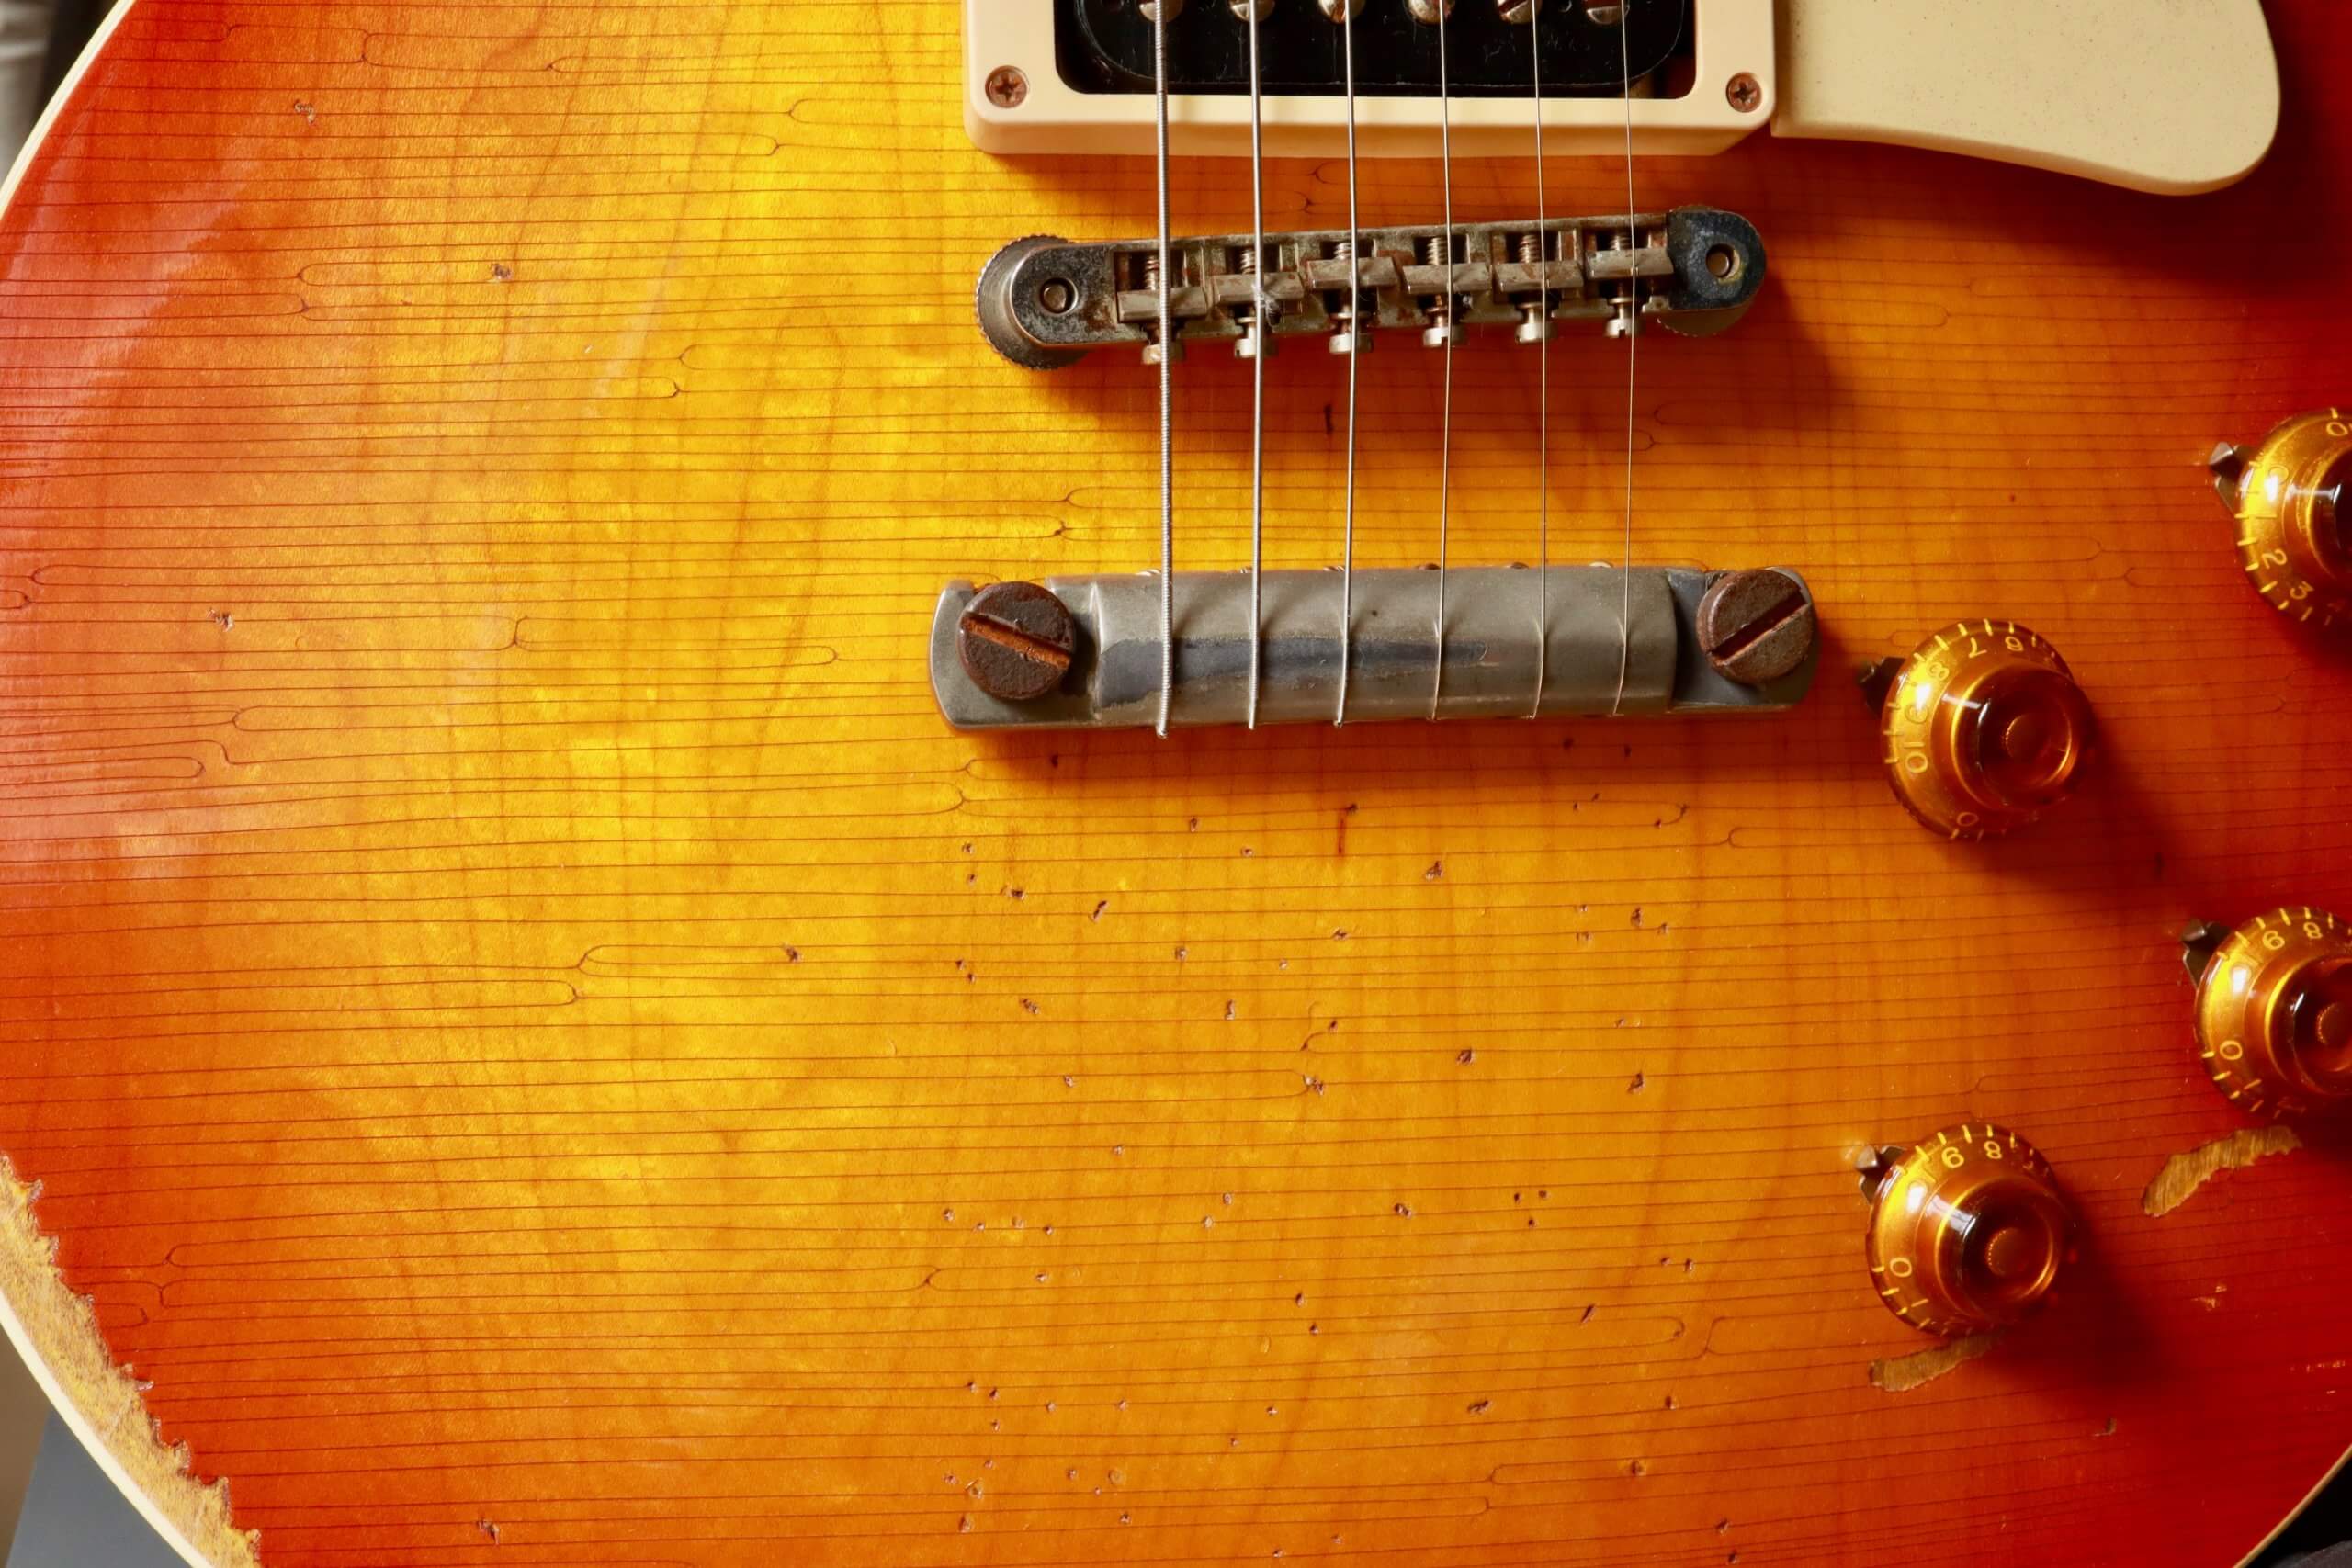 Extreme closeup of a guitar with a sunburst finish